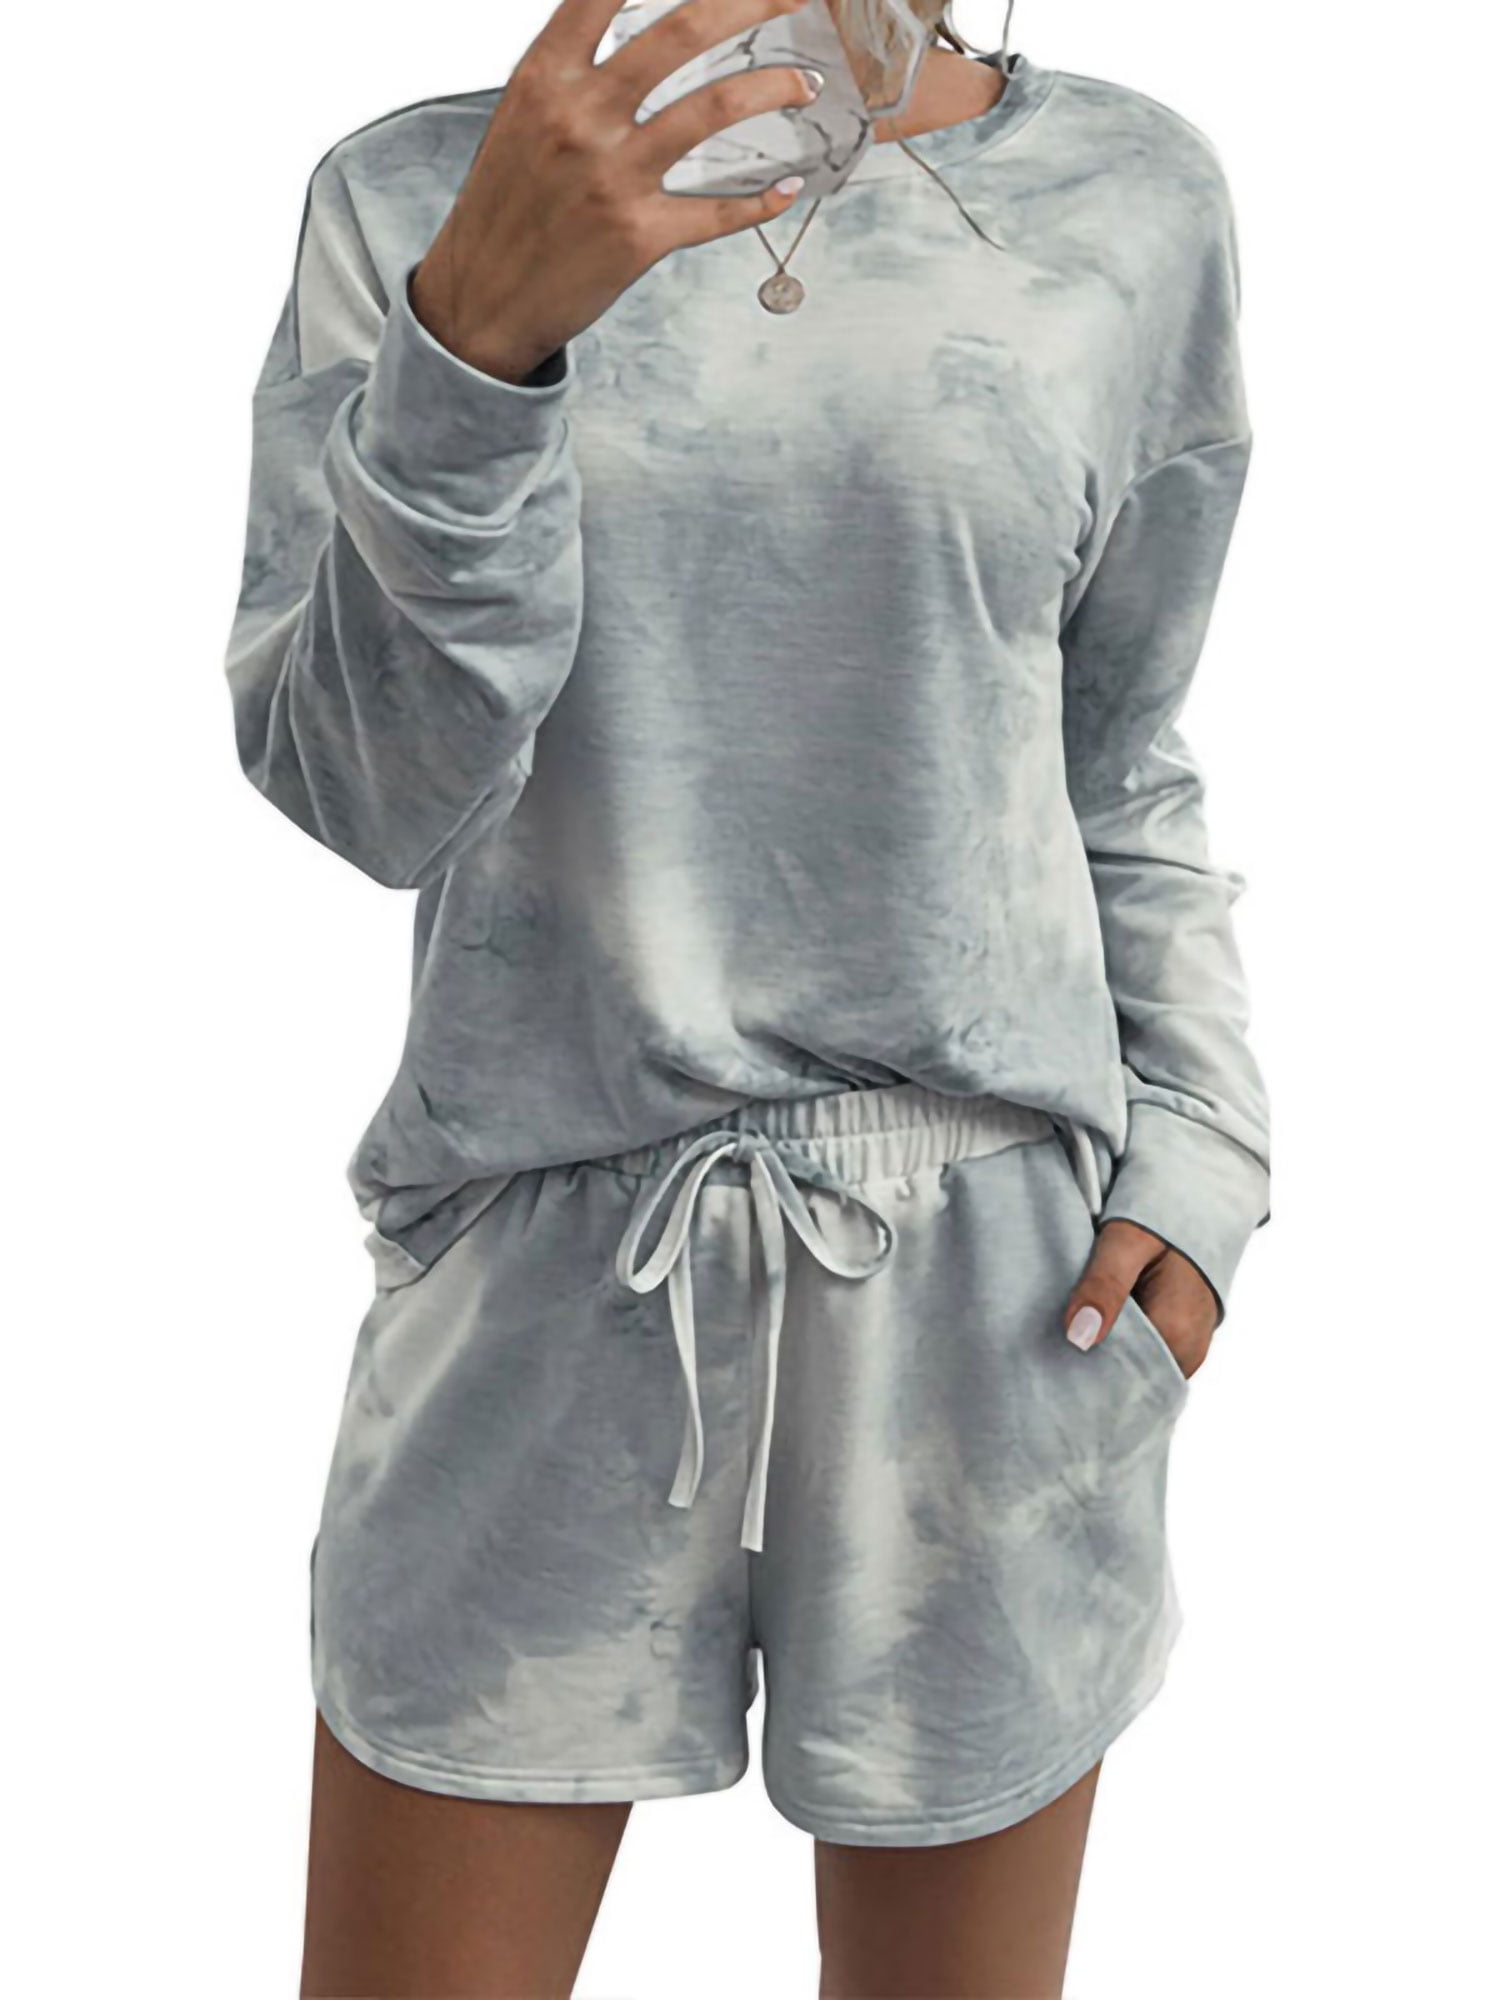 Details about  / 2 Piece Sets Women Gradient Homewear Tshirt Biker Shorts Sleepwear Pajamas